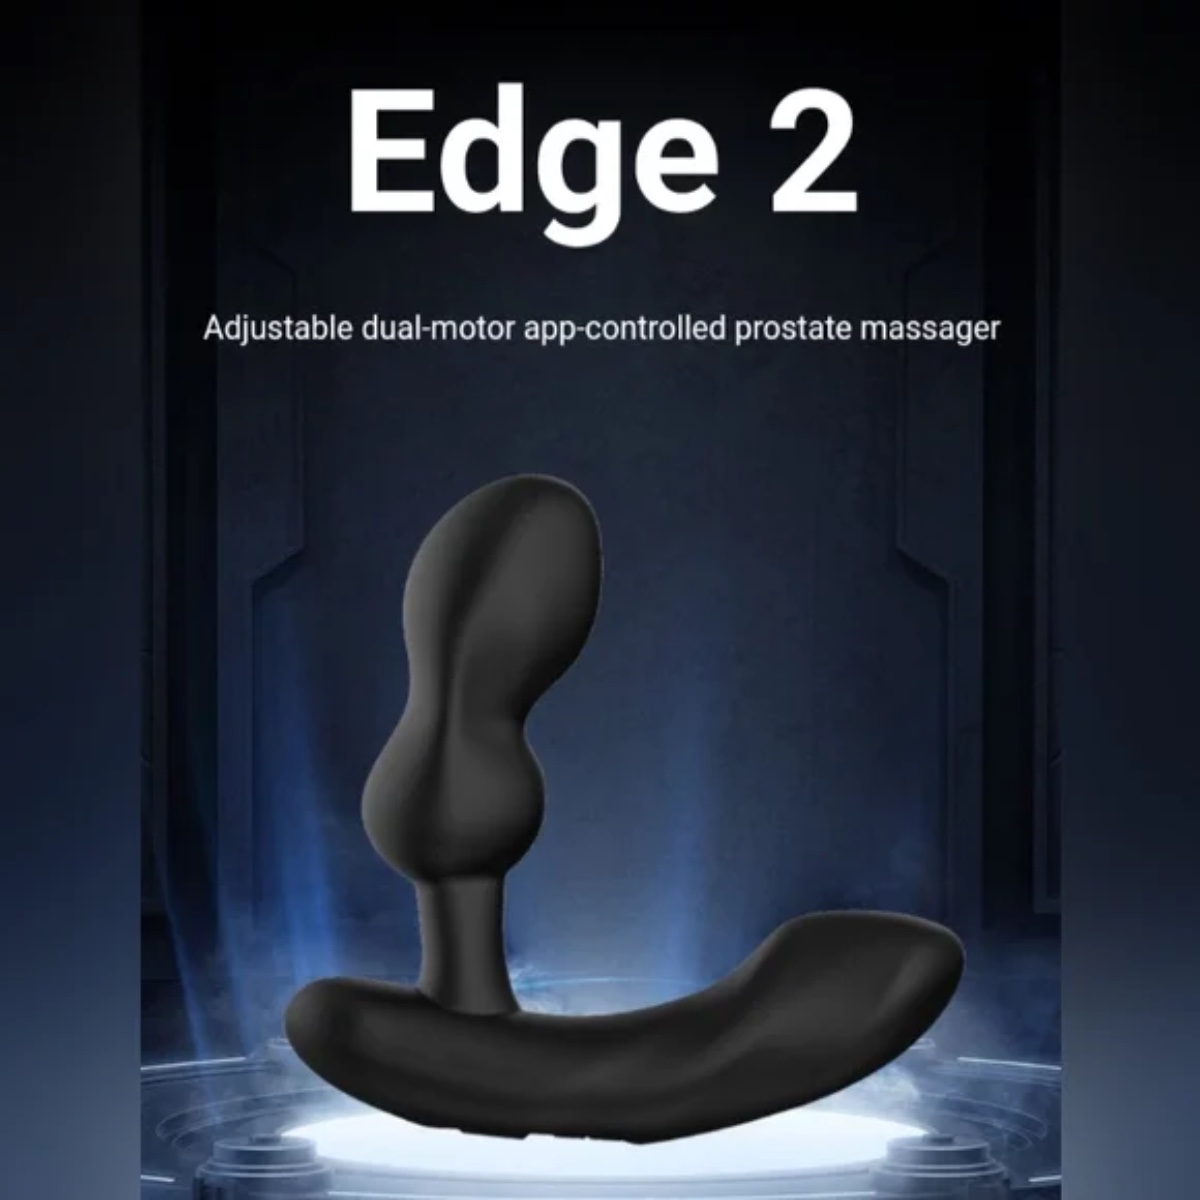 Lovense Edge 2 Review - The Best Prostate Massager Yet?